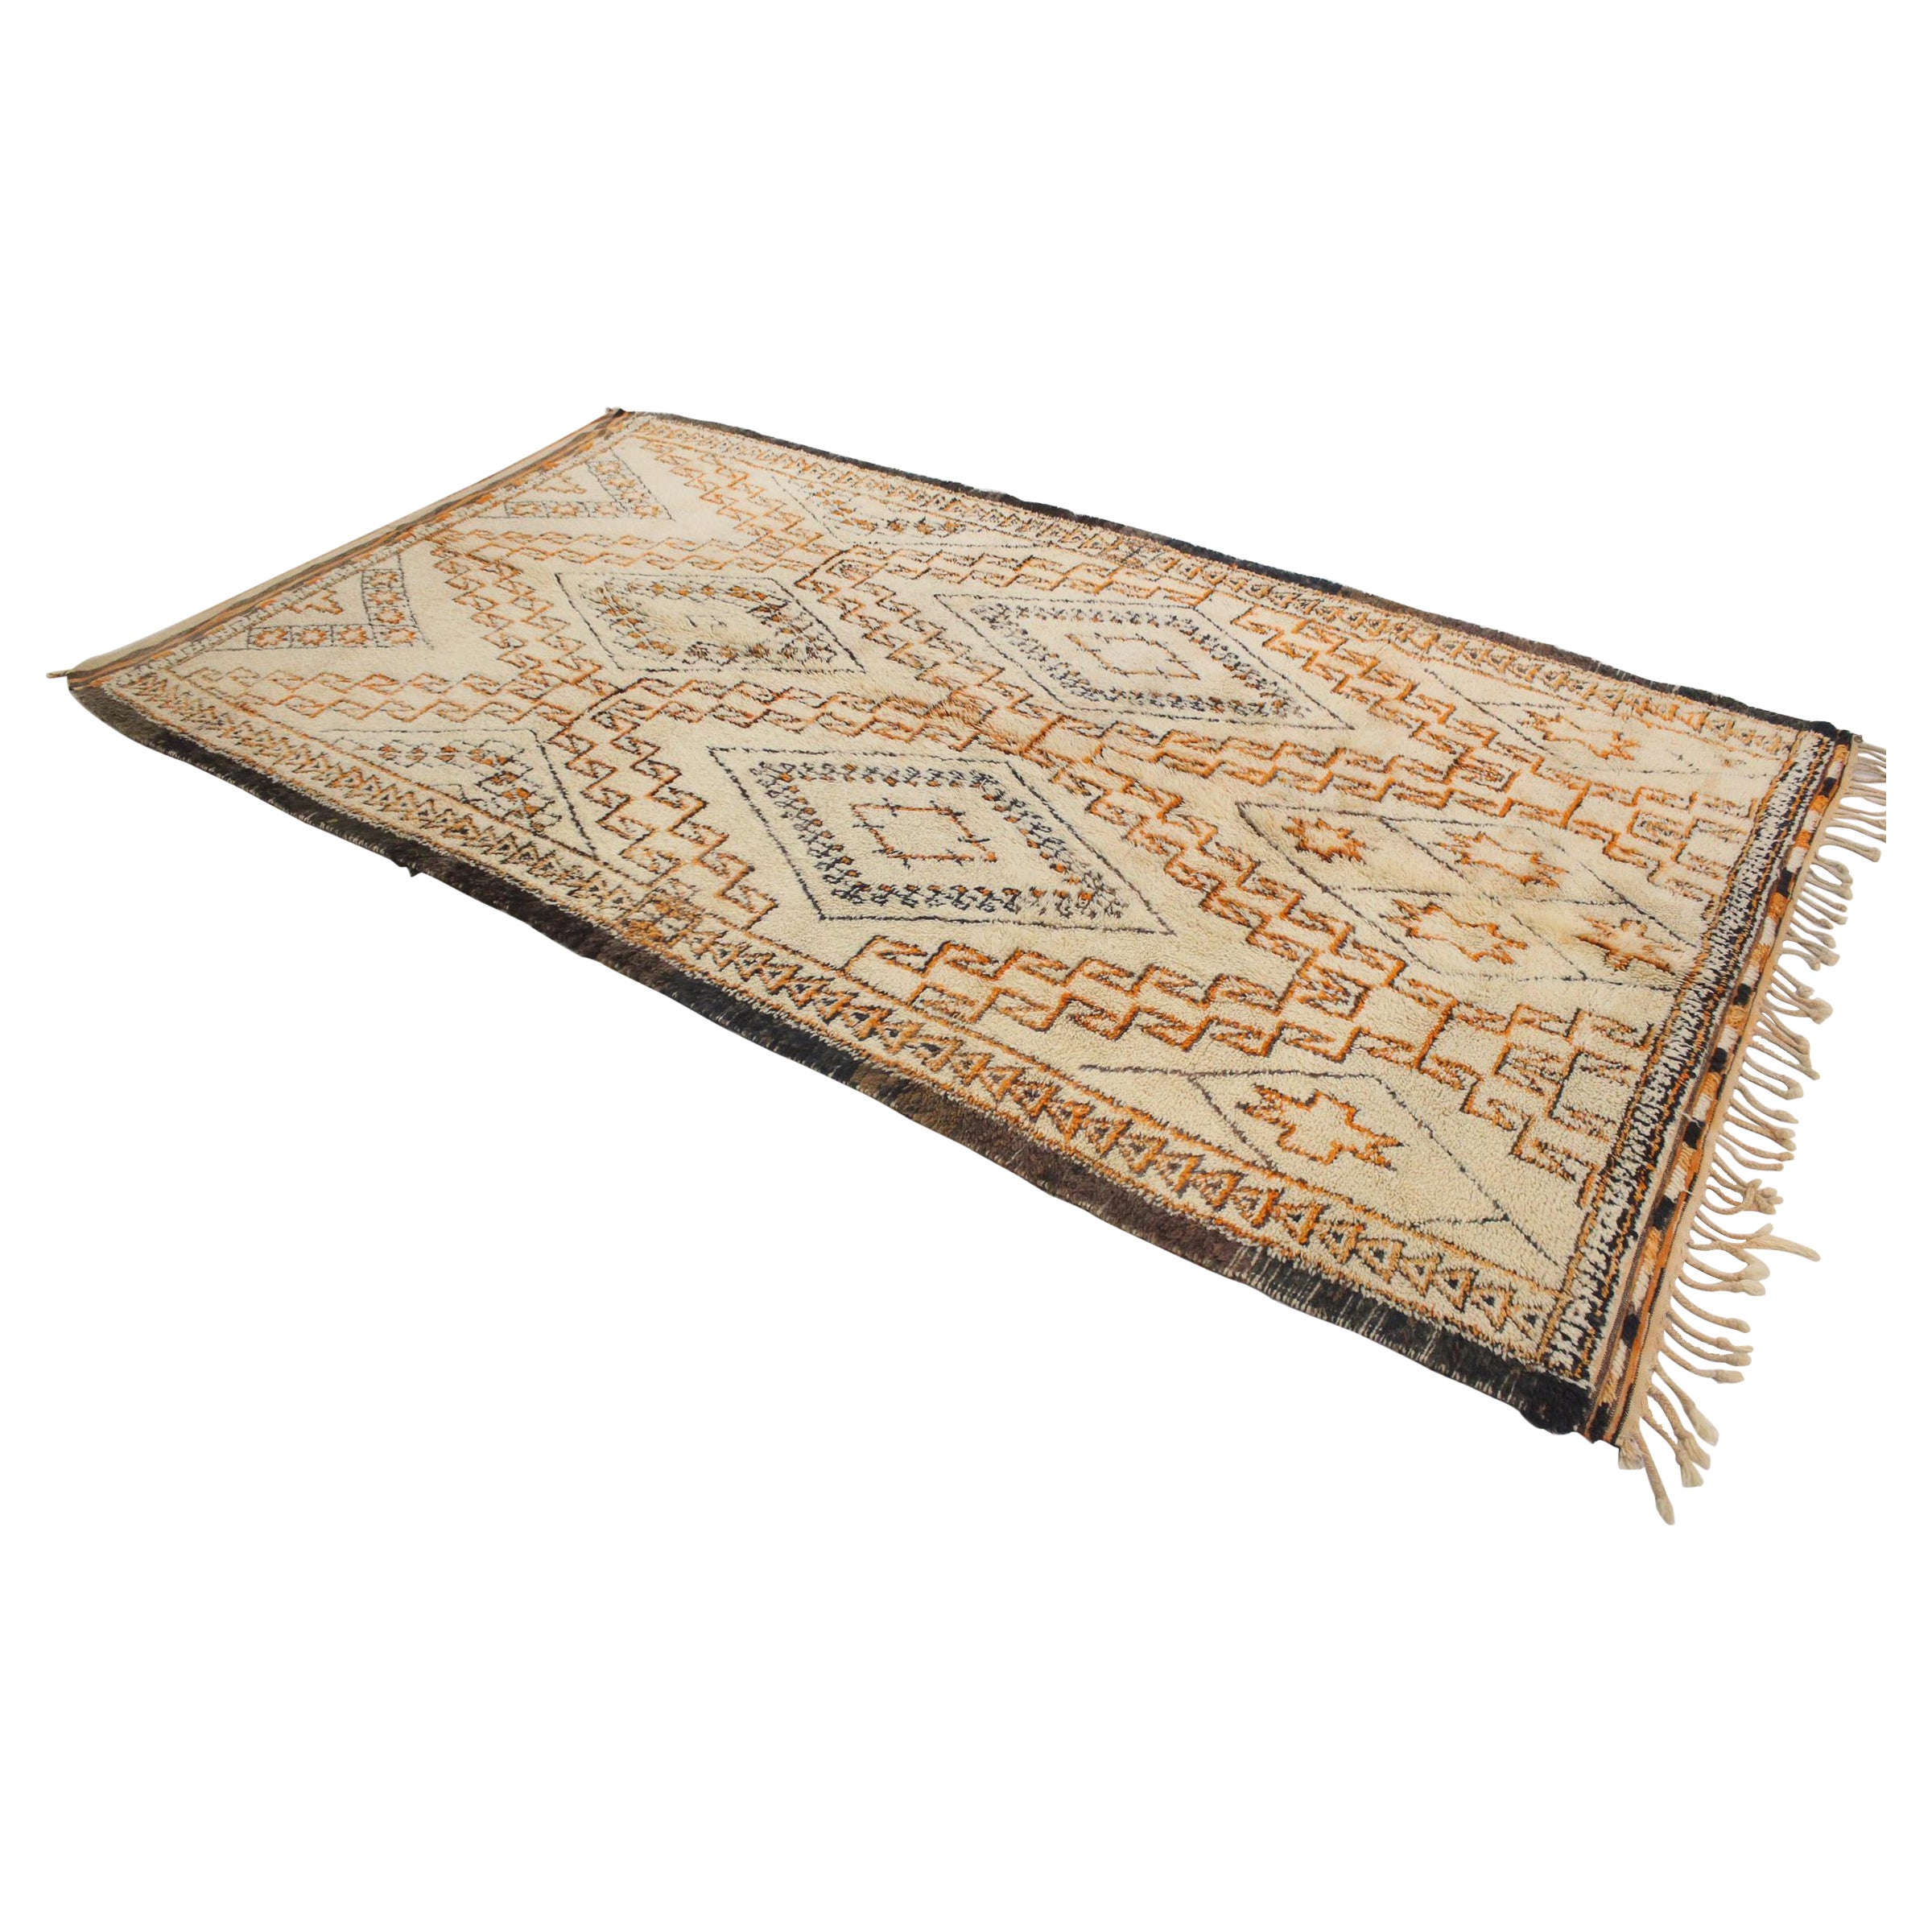 Vintage Moroccan Beni Ourain rug - Beige/orange - 6.2x11.1feet / 190x340cm